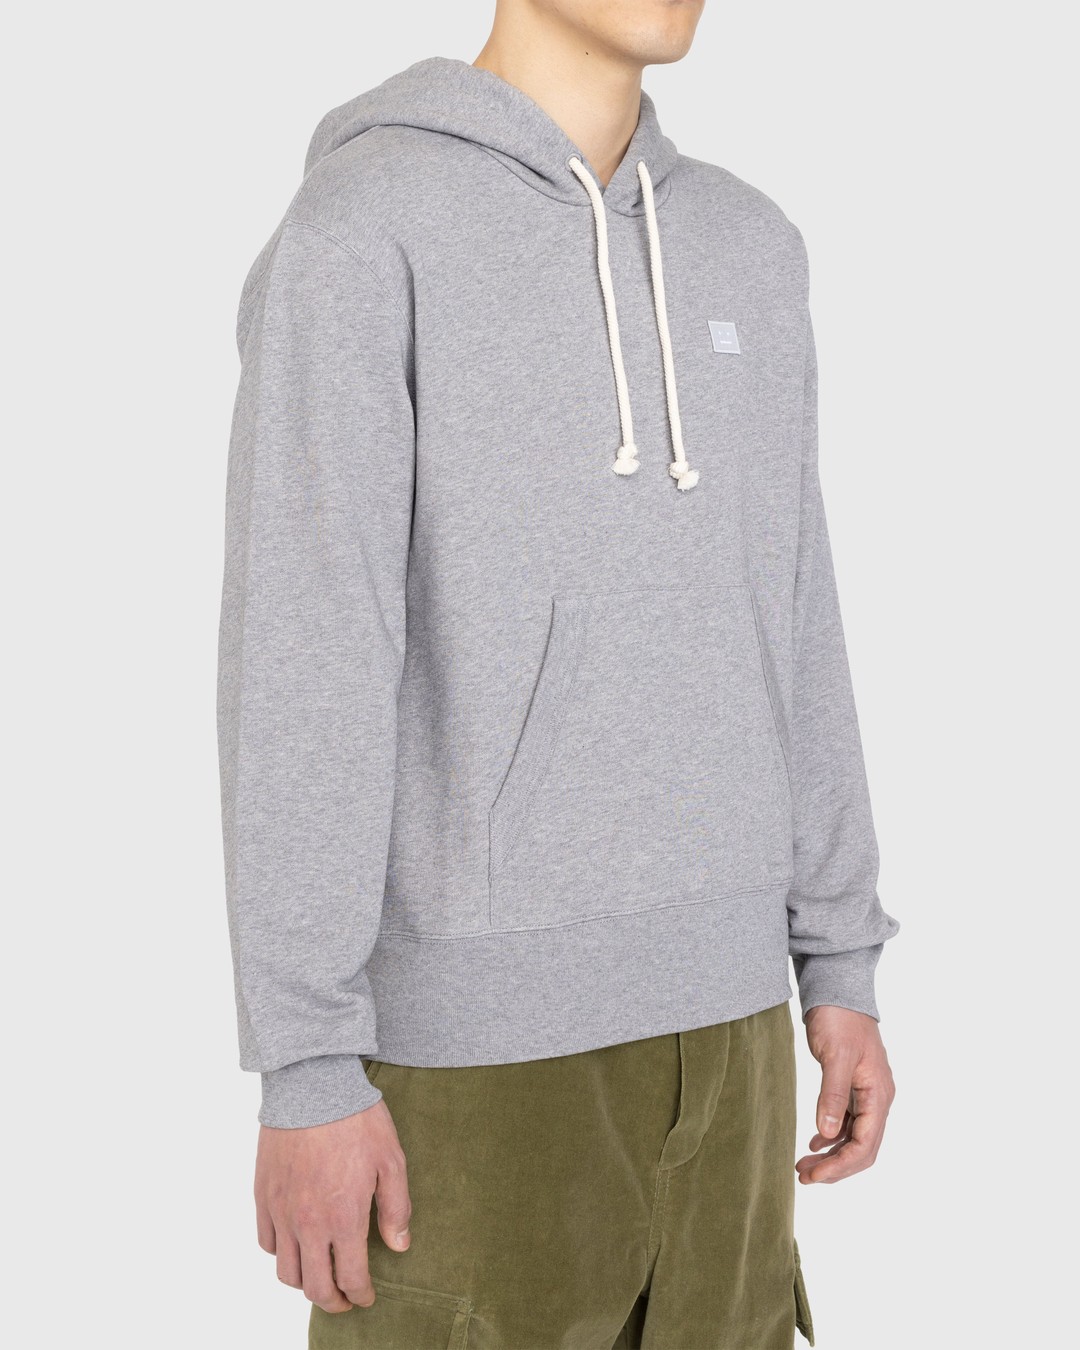 Acne Studios – Organic Cotton Hooded Sweatshirt Grey - Sweats - Grey - Image 3